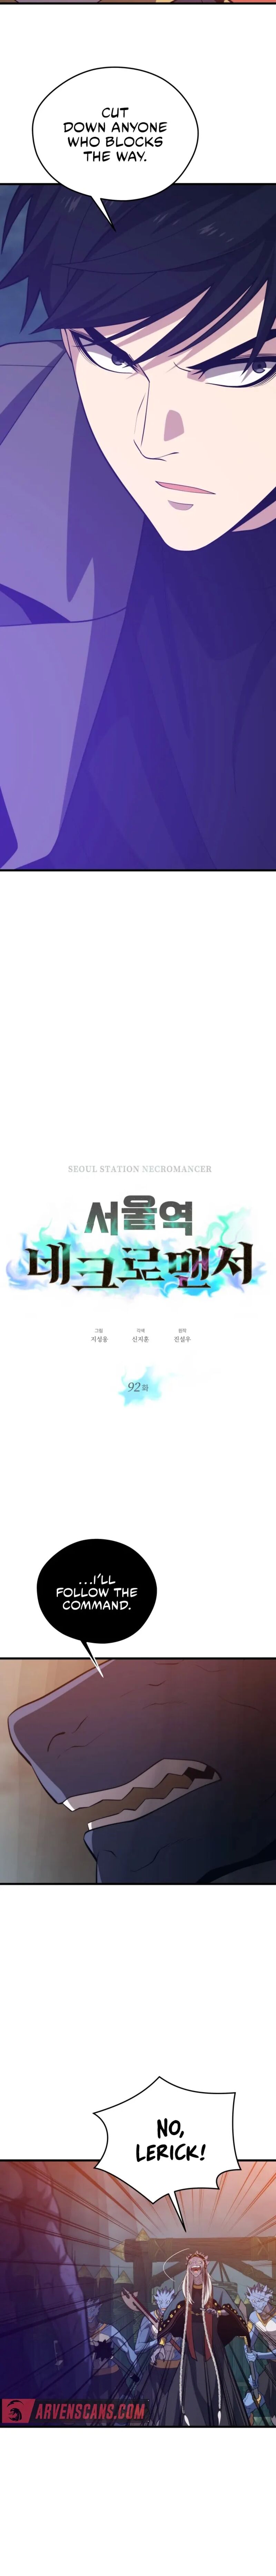 Seoul Stations Necromancer 92 2